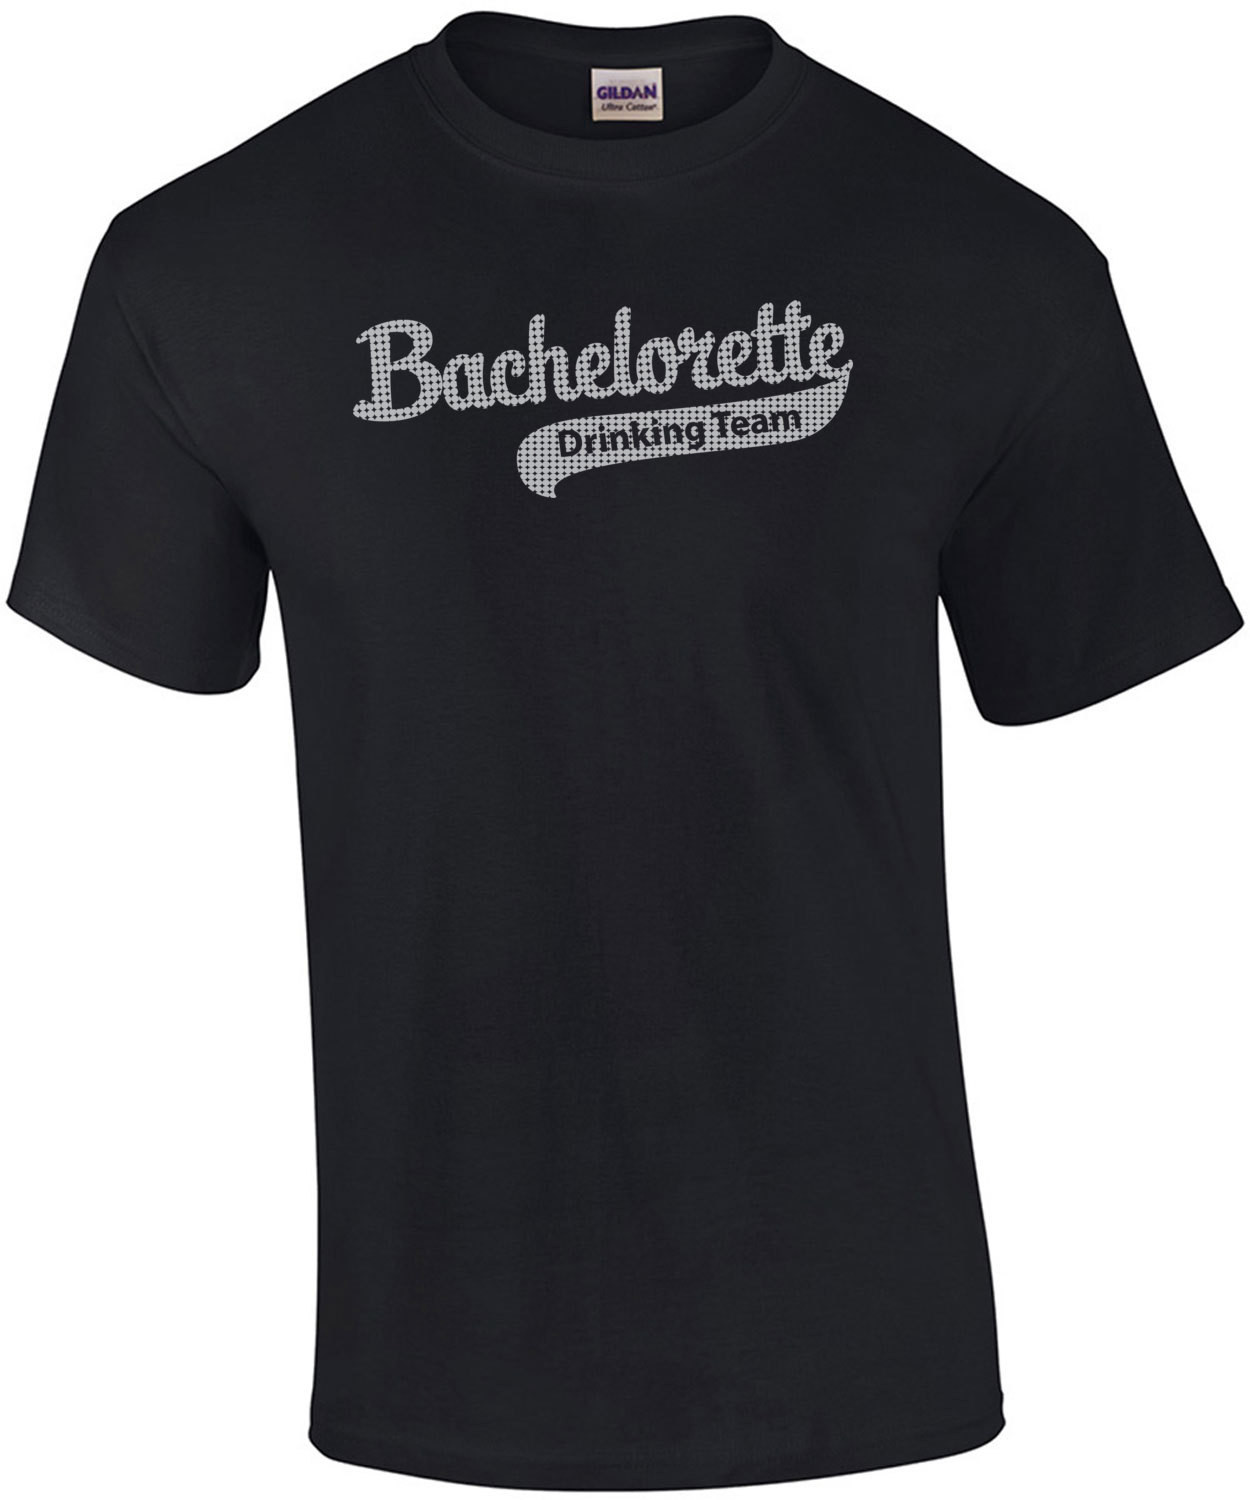 Bachelorette Drinking Team - Bachelorette t-shirt